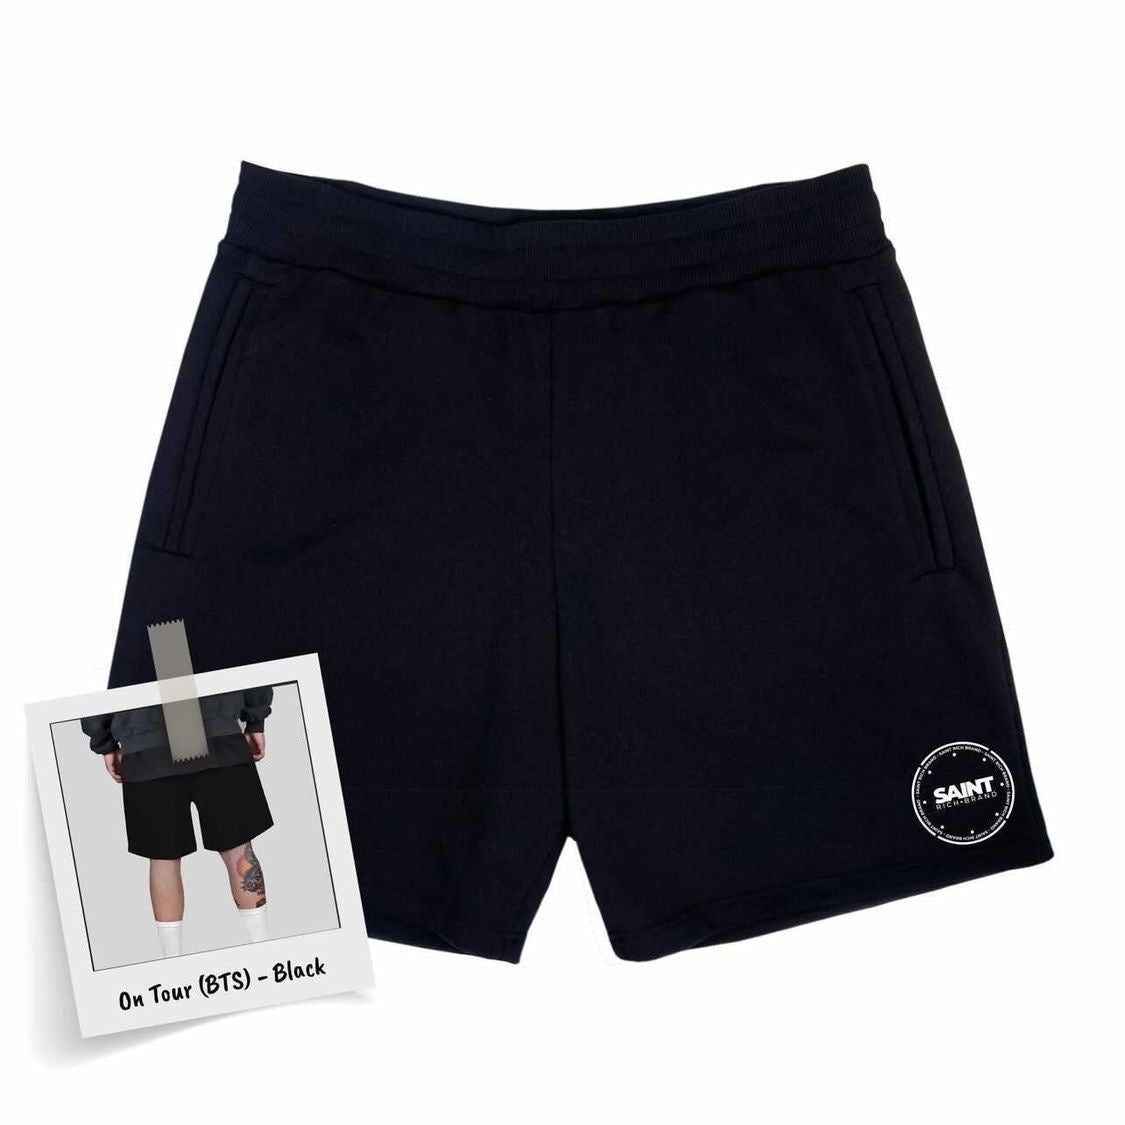 S1:E1 Lux Street Wear: On – Shorts Rich Saint Brand Tour